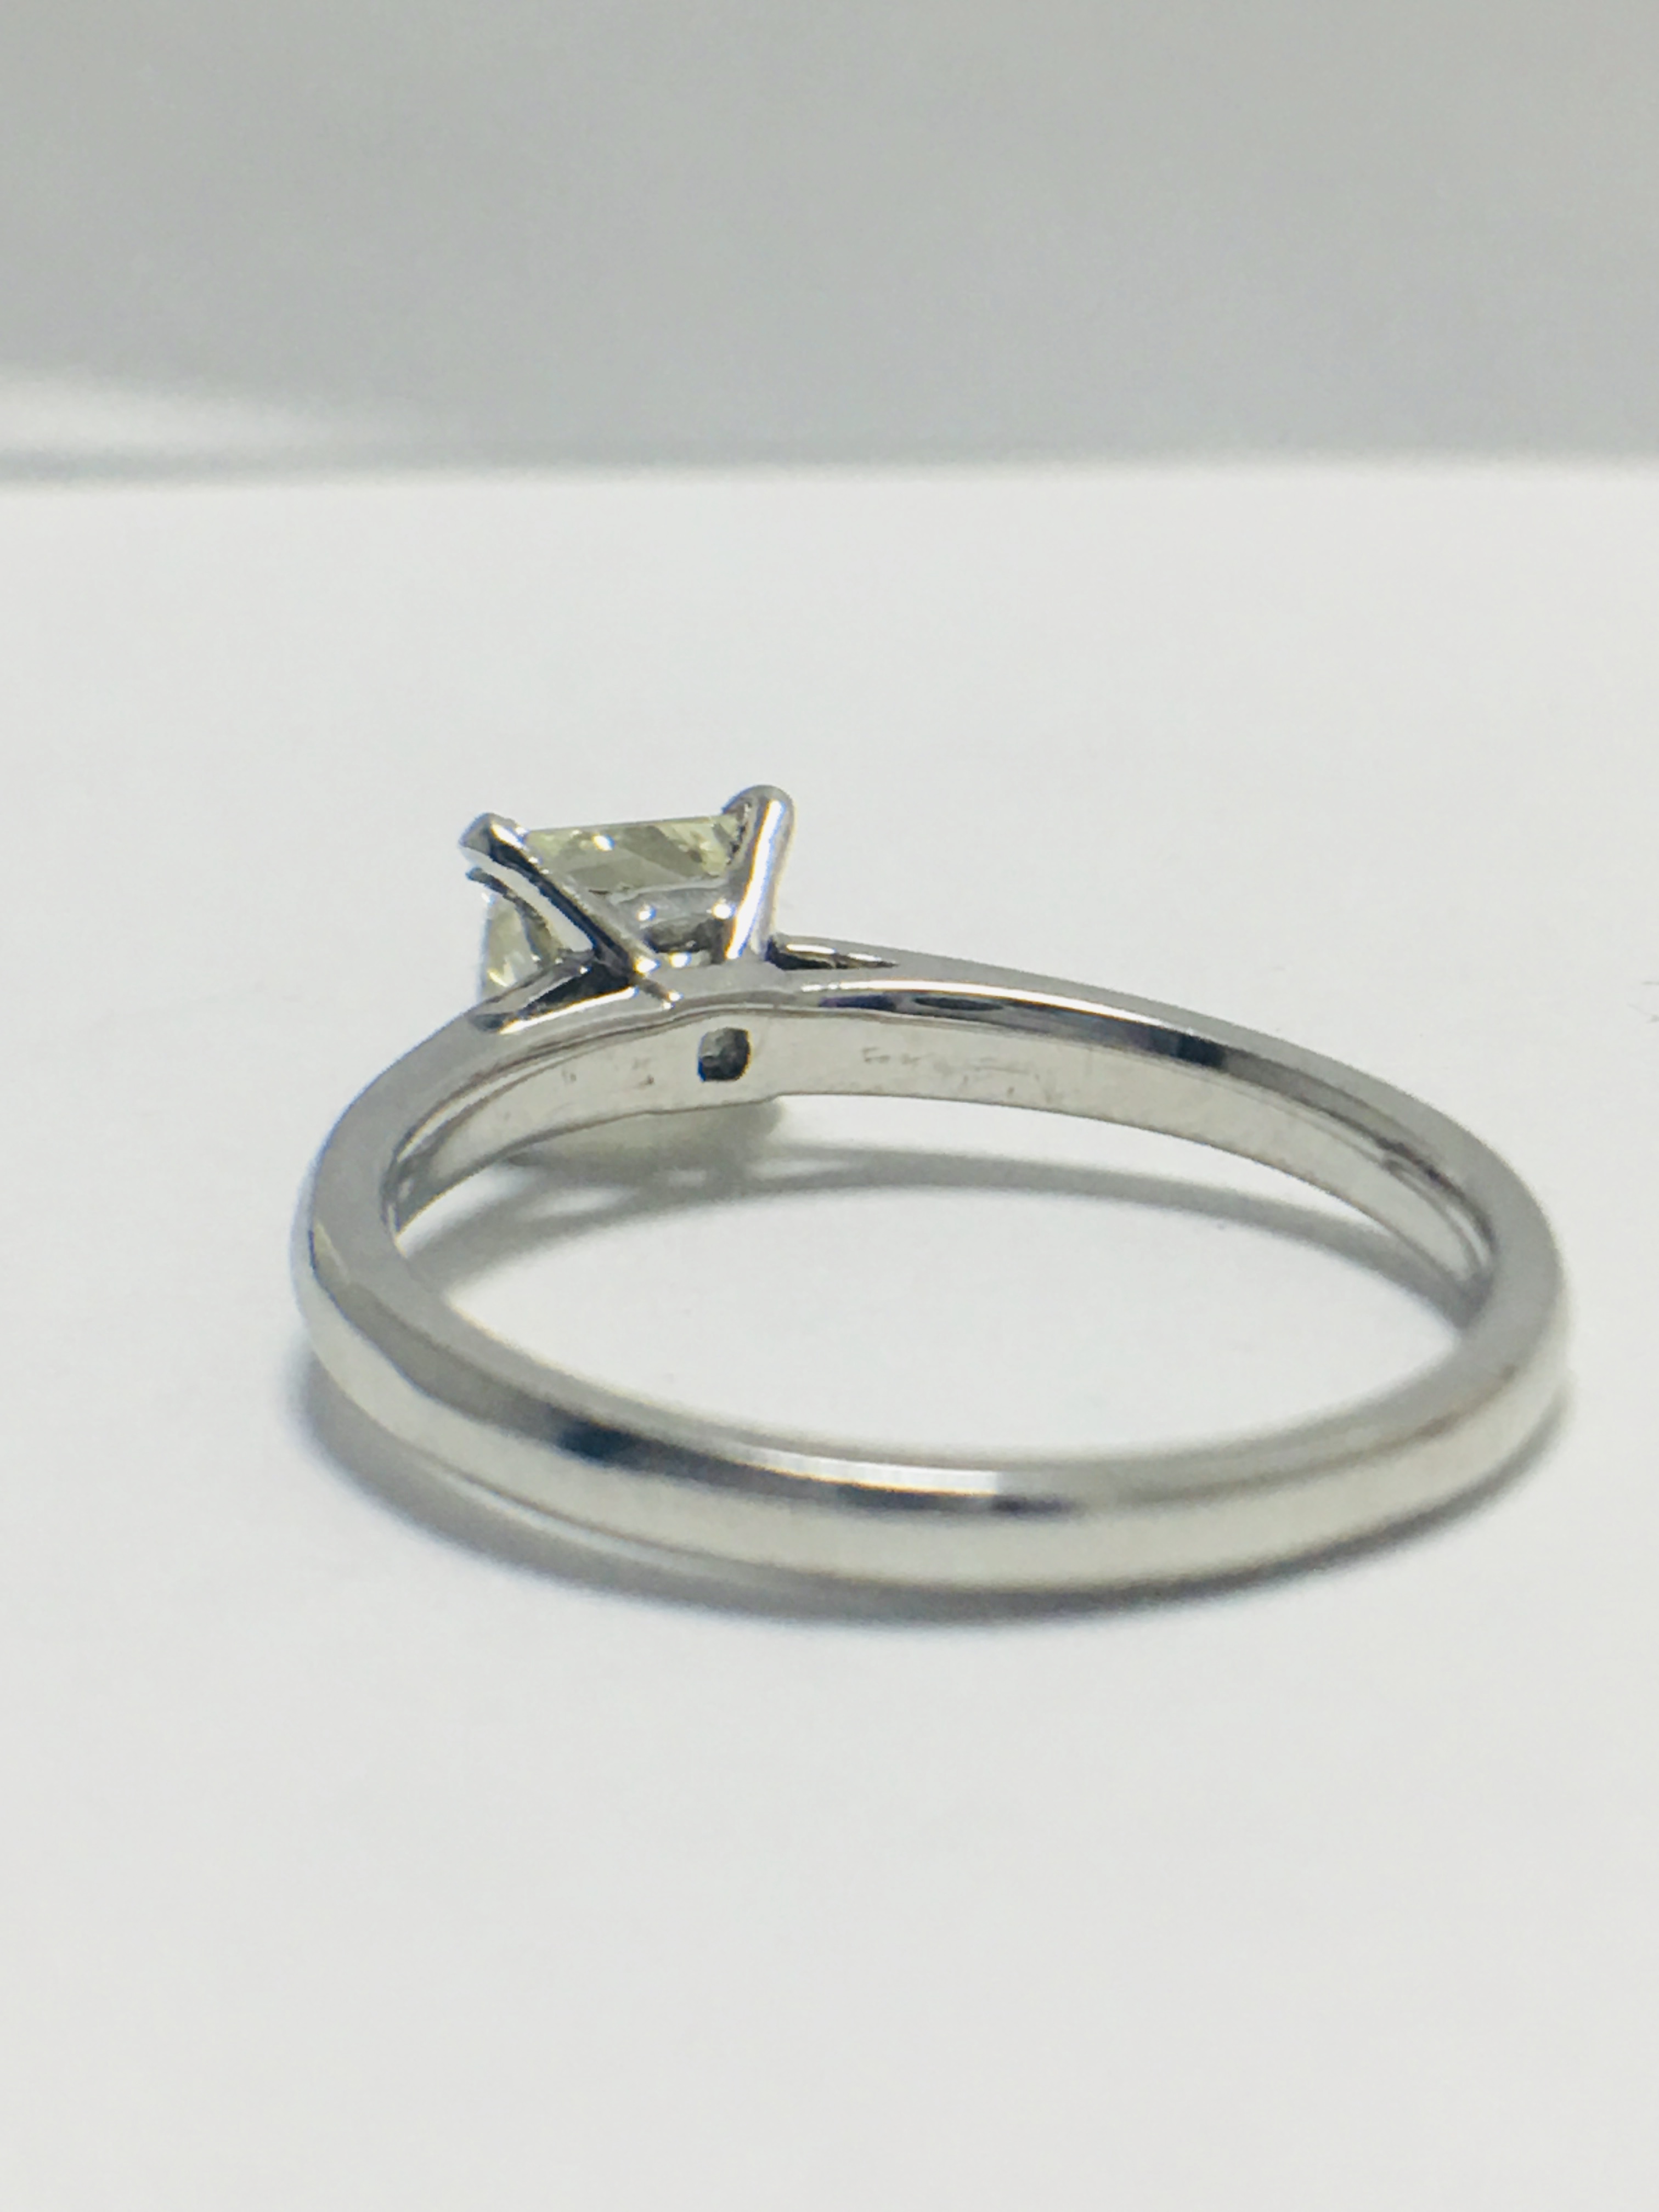 1ct Natural Princes Cut diamond platinum ring - Image 4 of 10